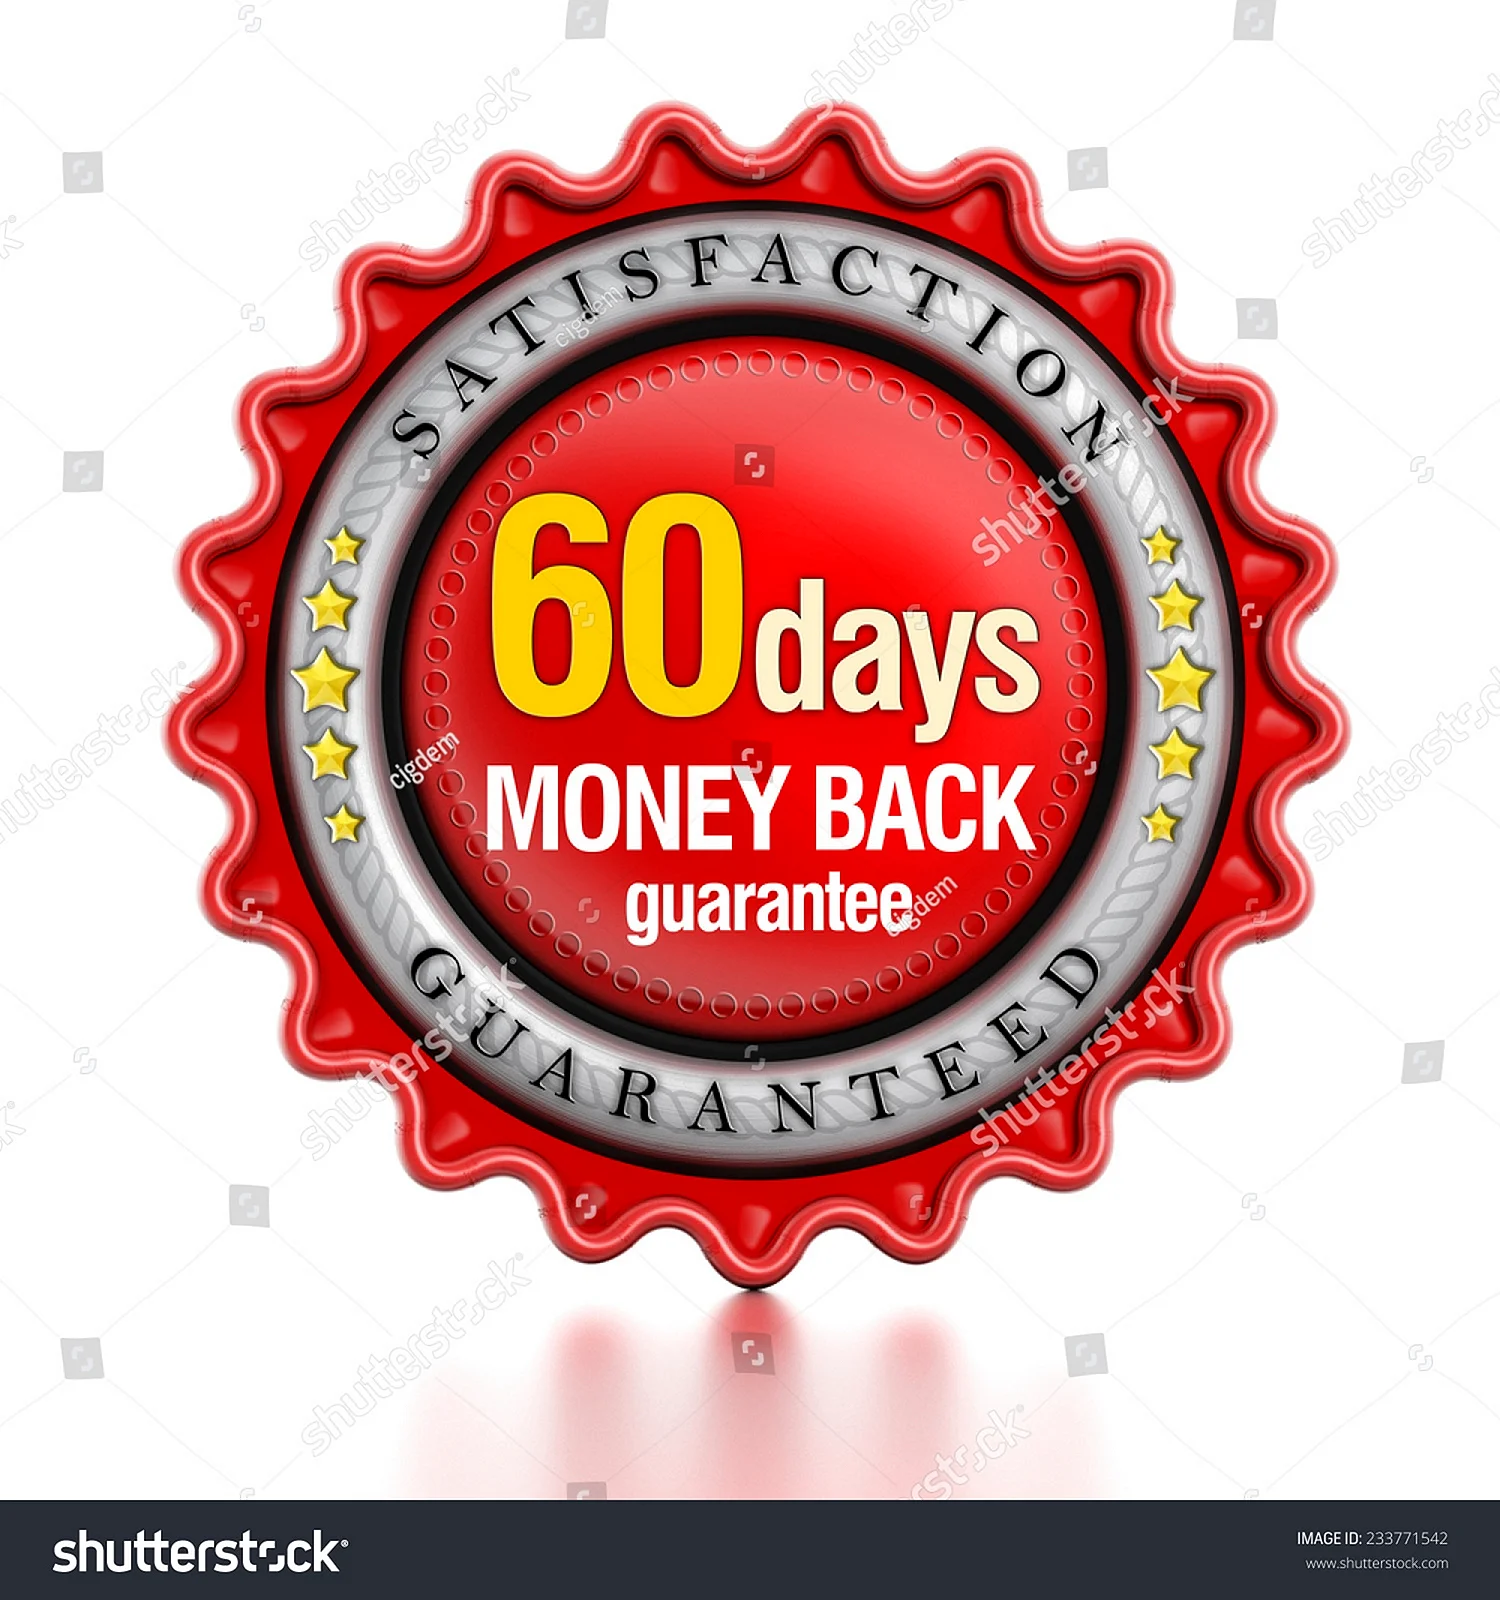 90 Days money back